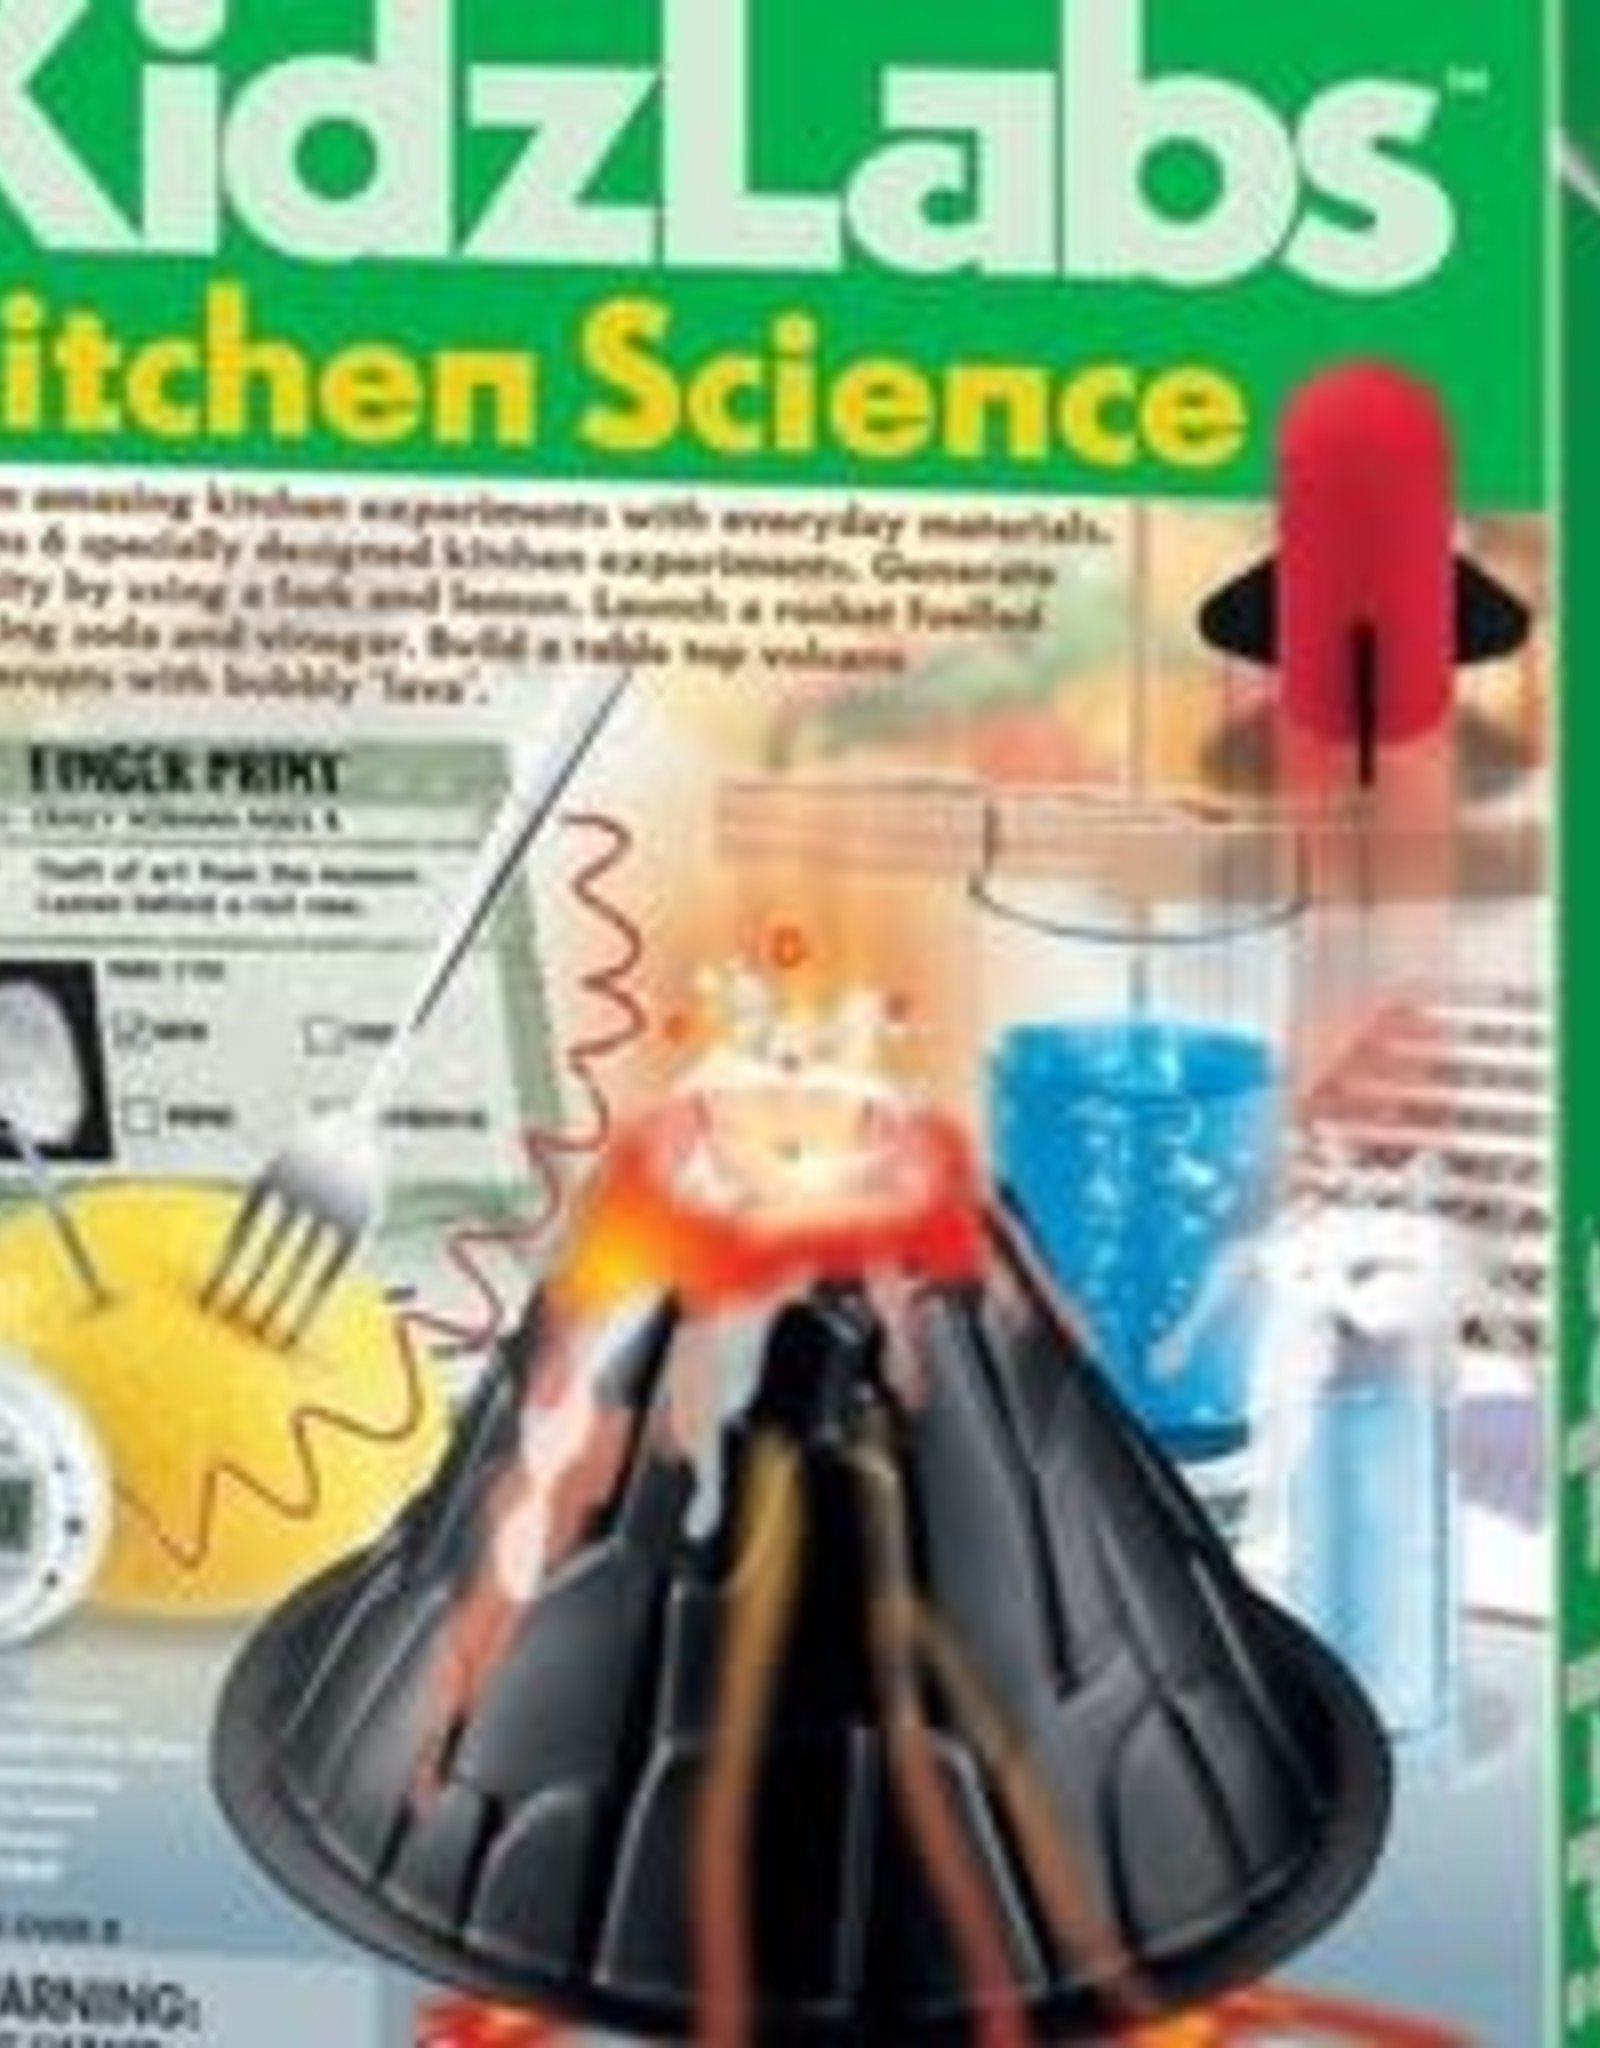 Toysmith Kitchen Science